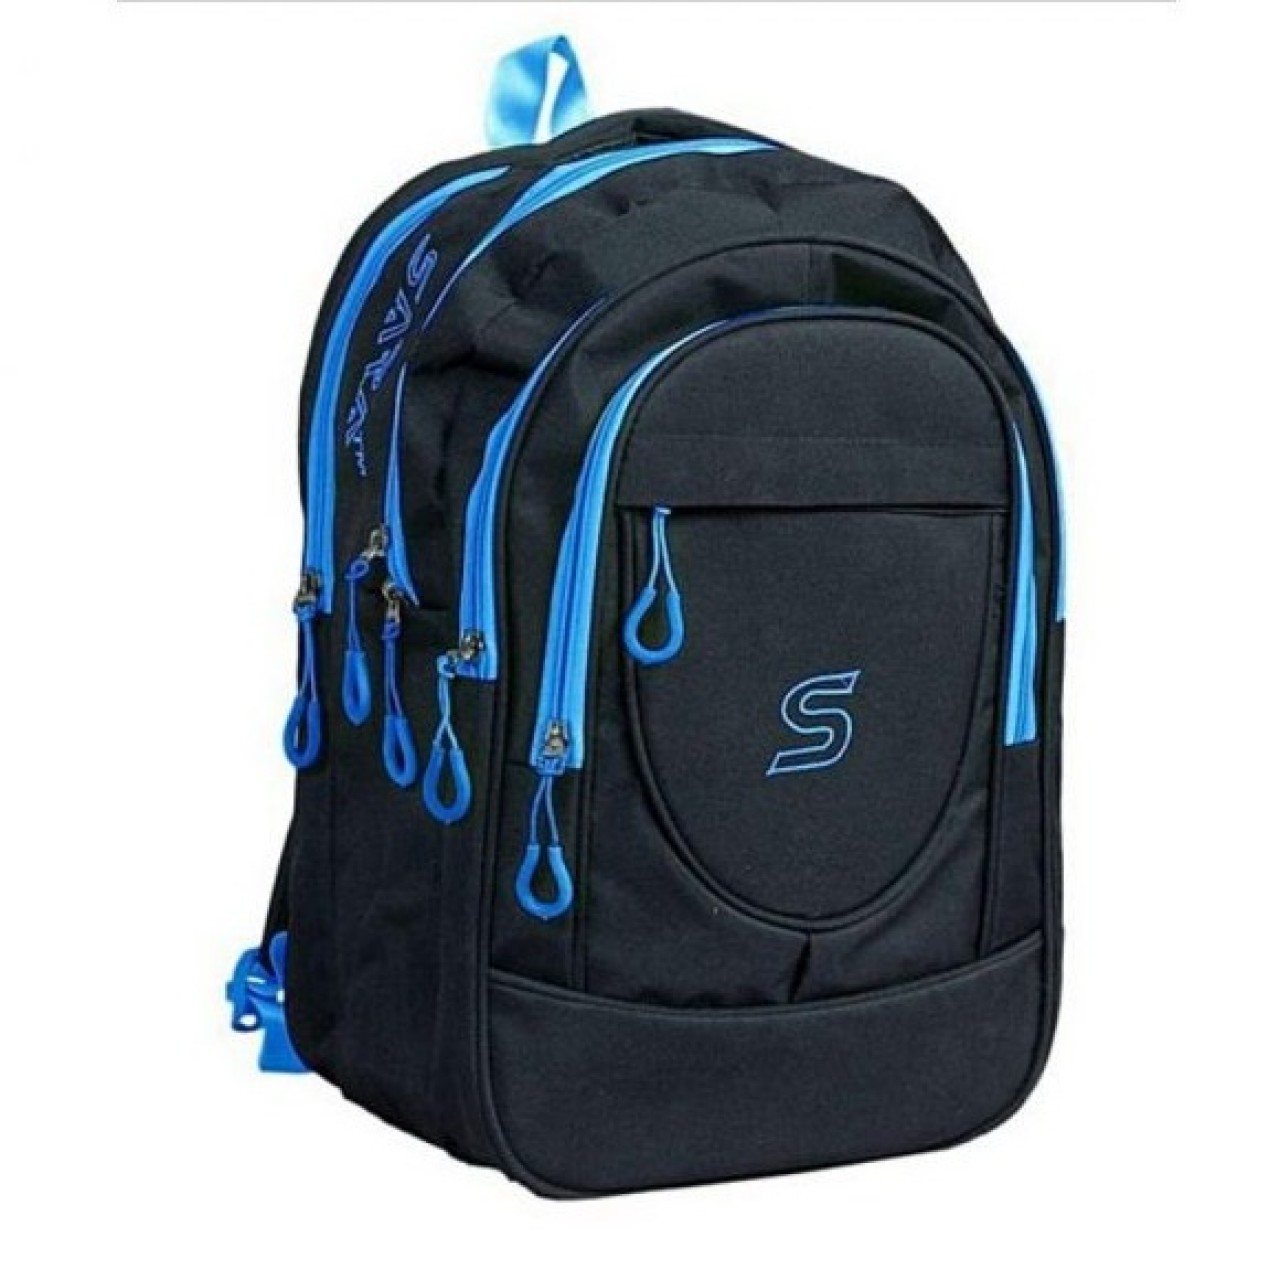 6 Zipper School Bag For Kids - Black (1 to 3 Class)